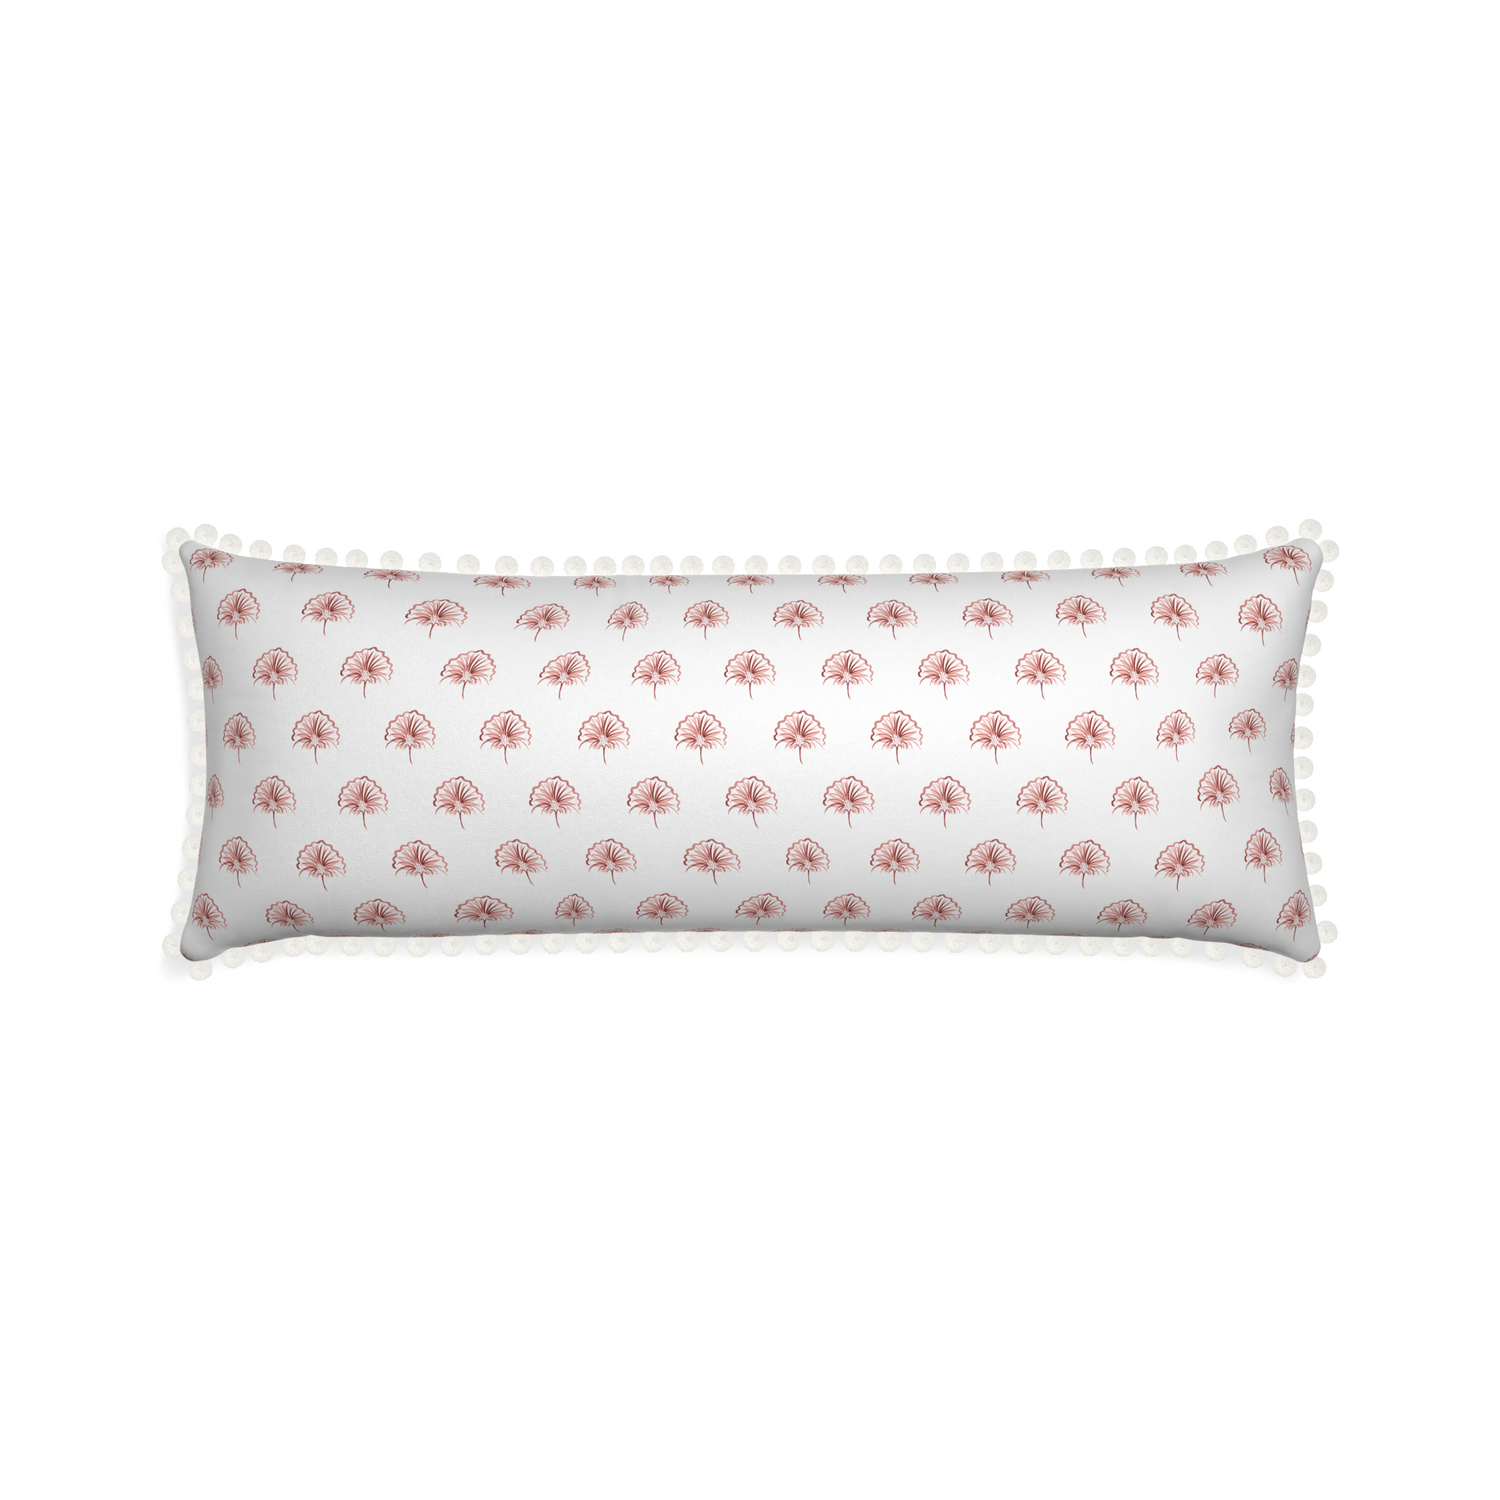 Xl-lumbar penelope rose custom pillow with snow pom pom on white background